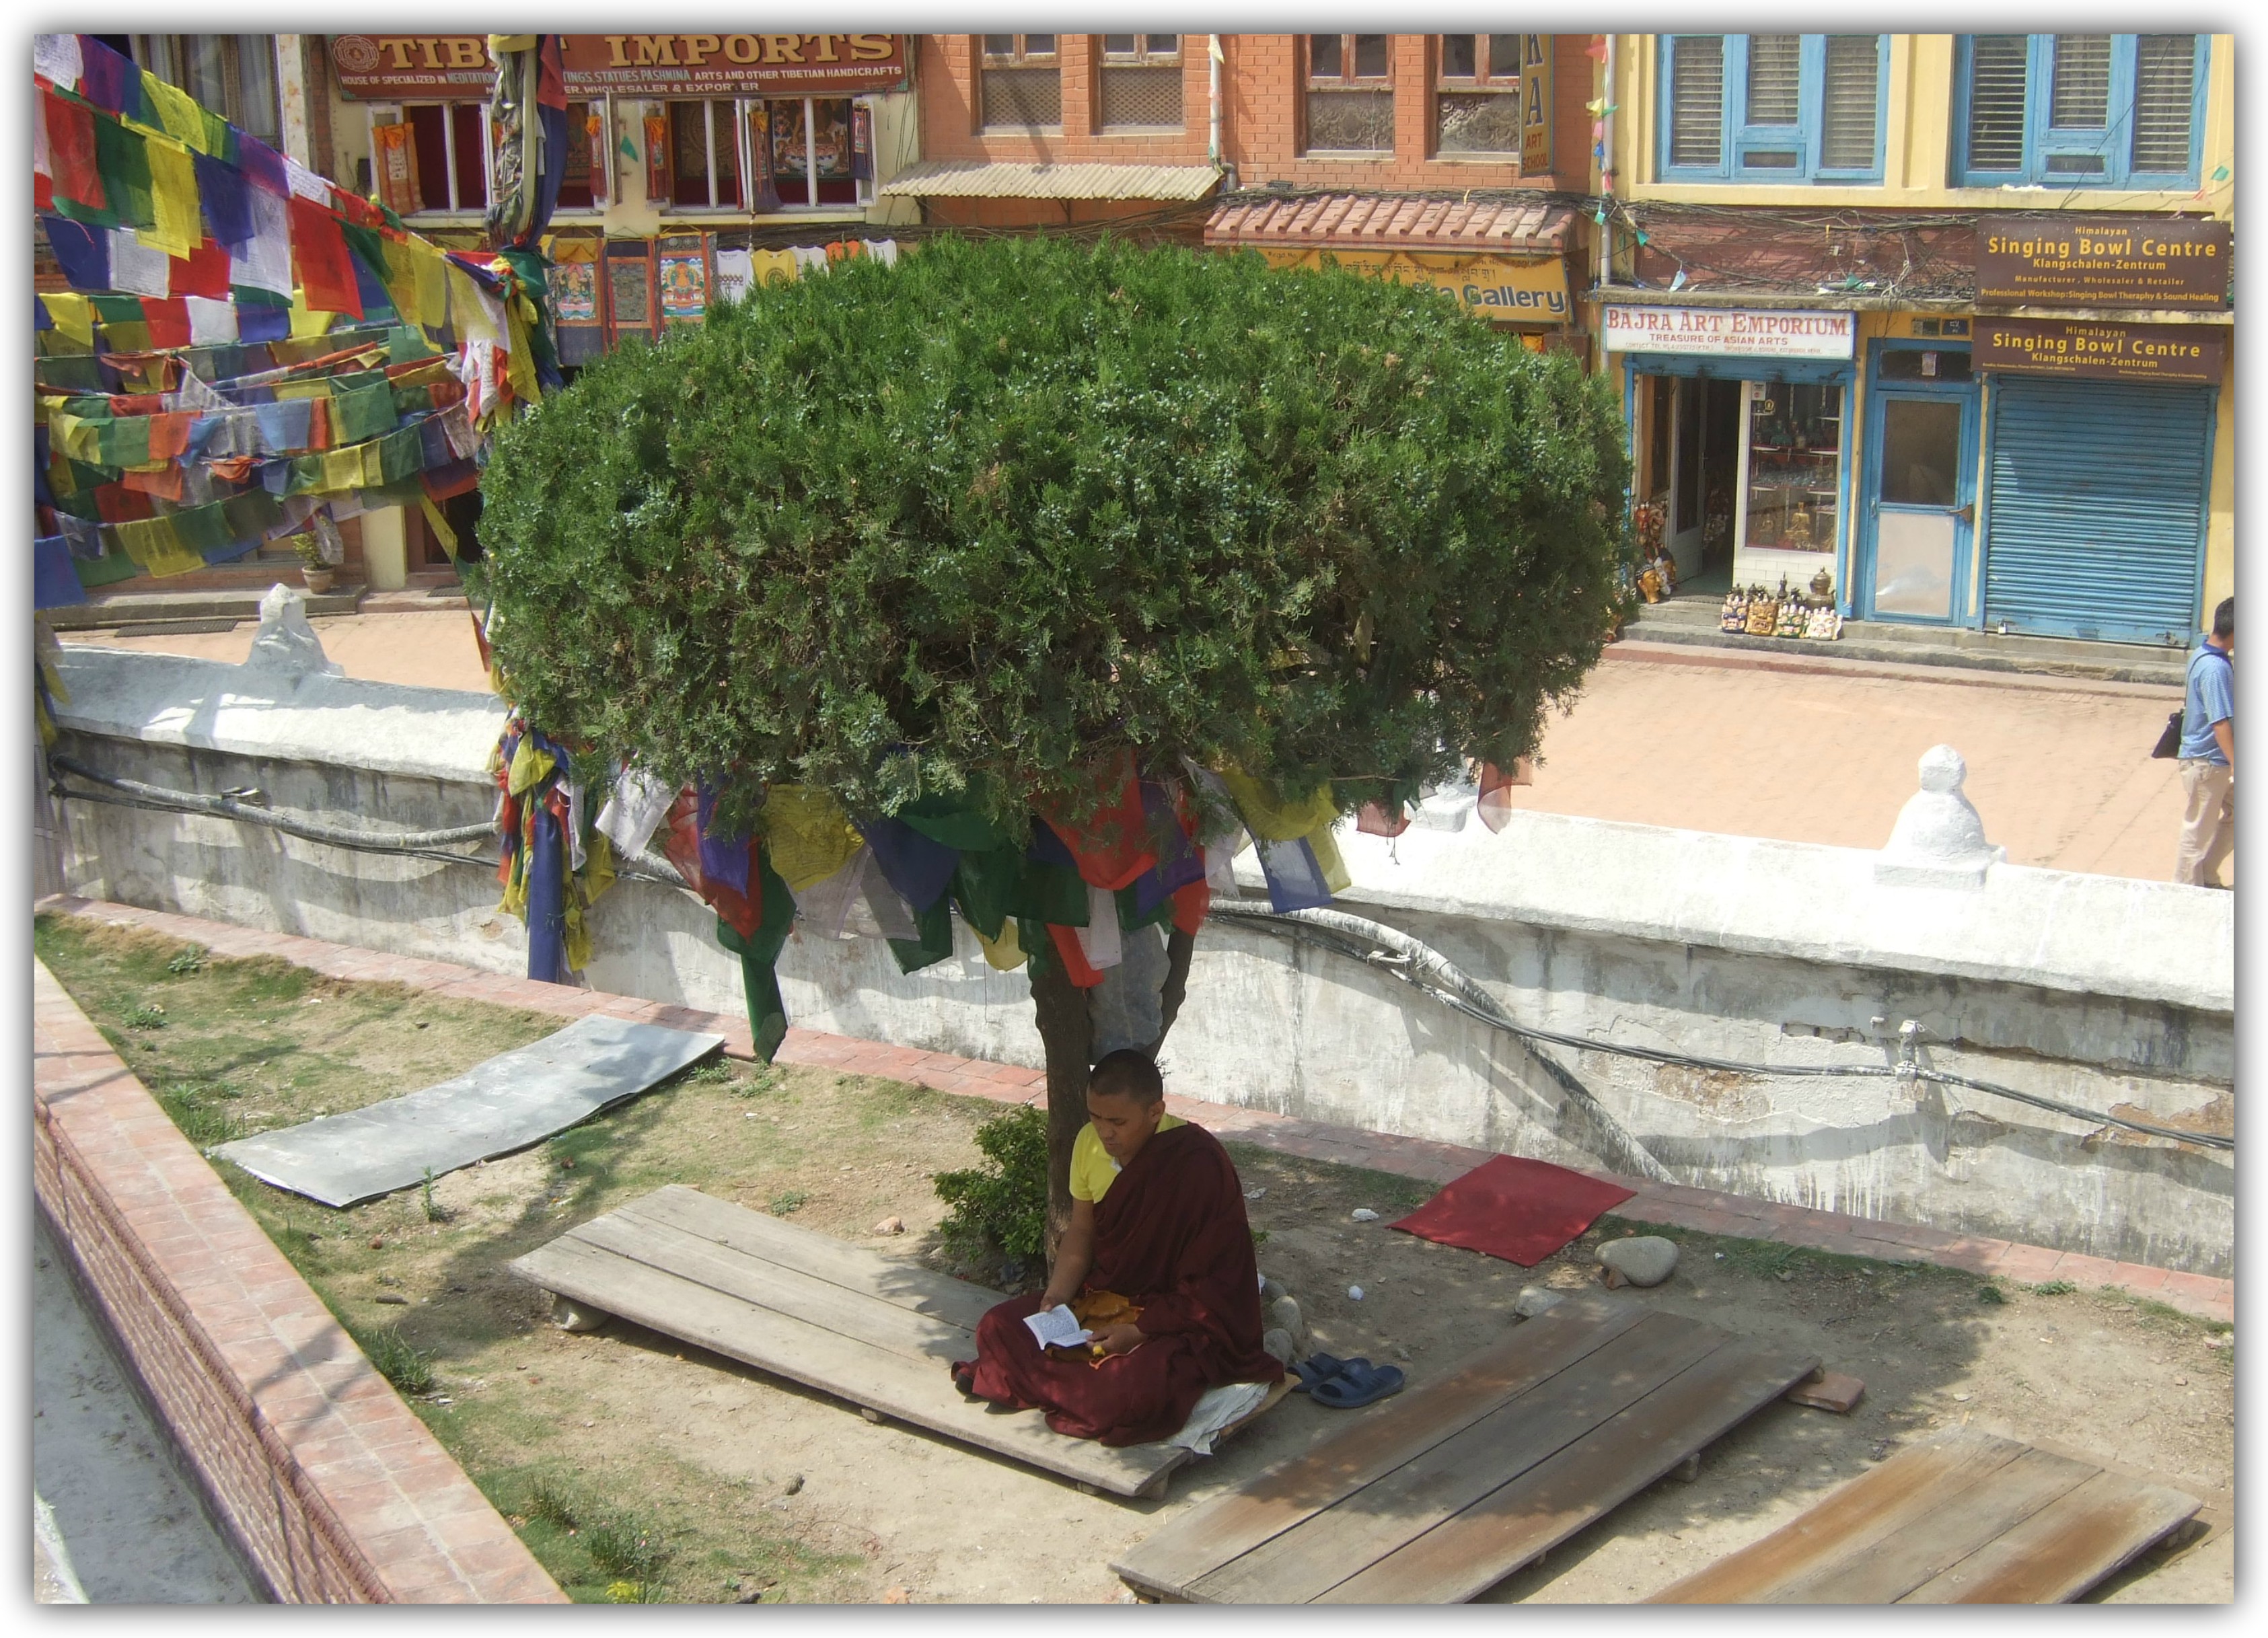 La Estupa de Boudhanath, un lugar sagrado de Nepal